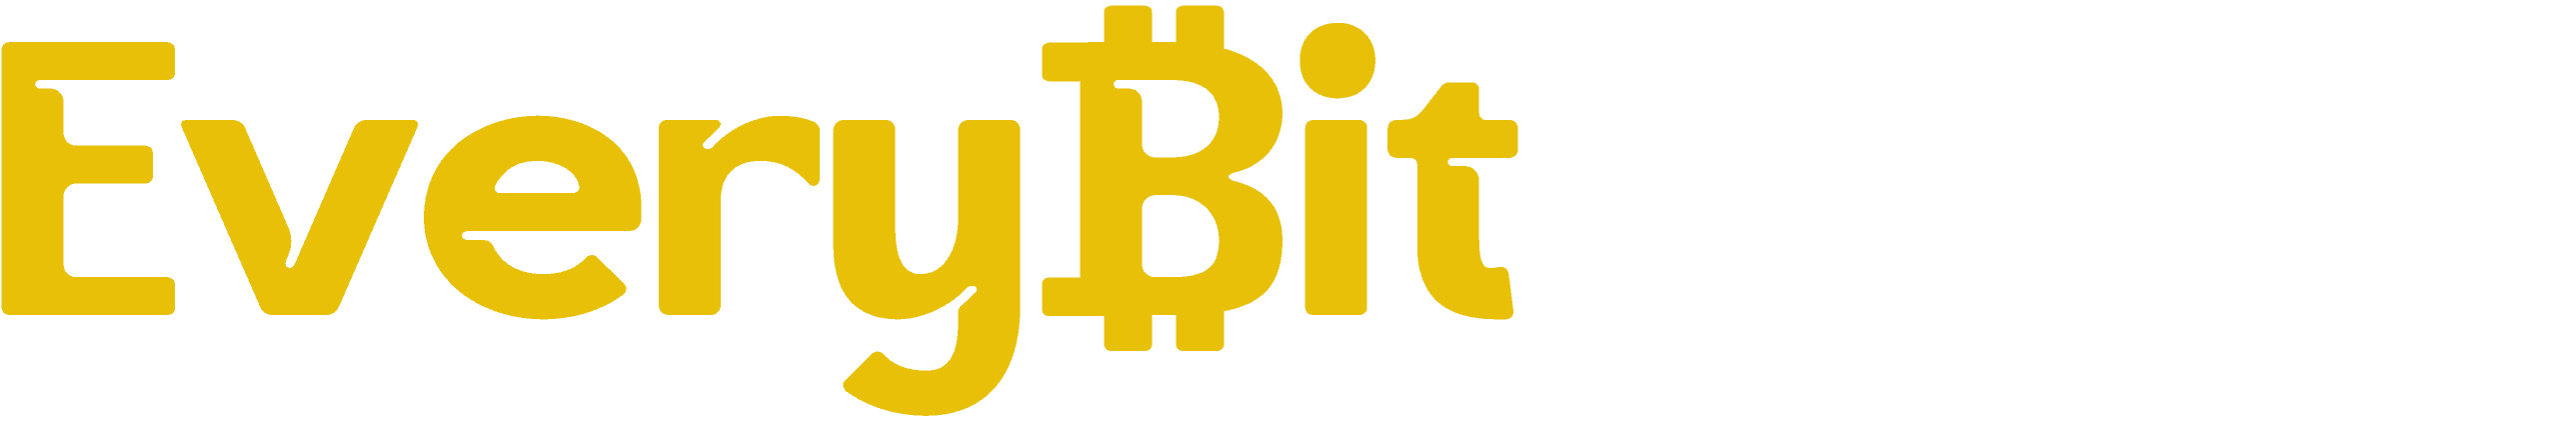 Every Bit Helps Logo